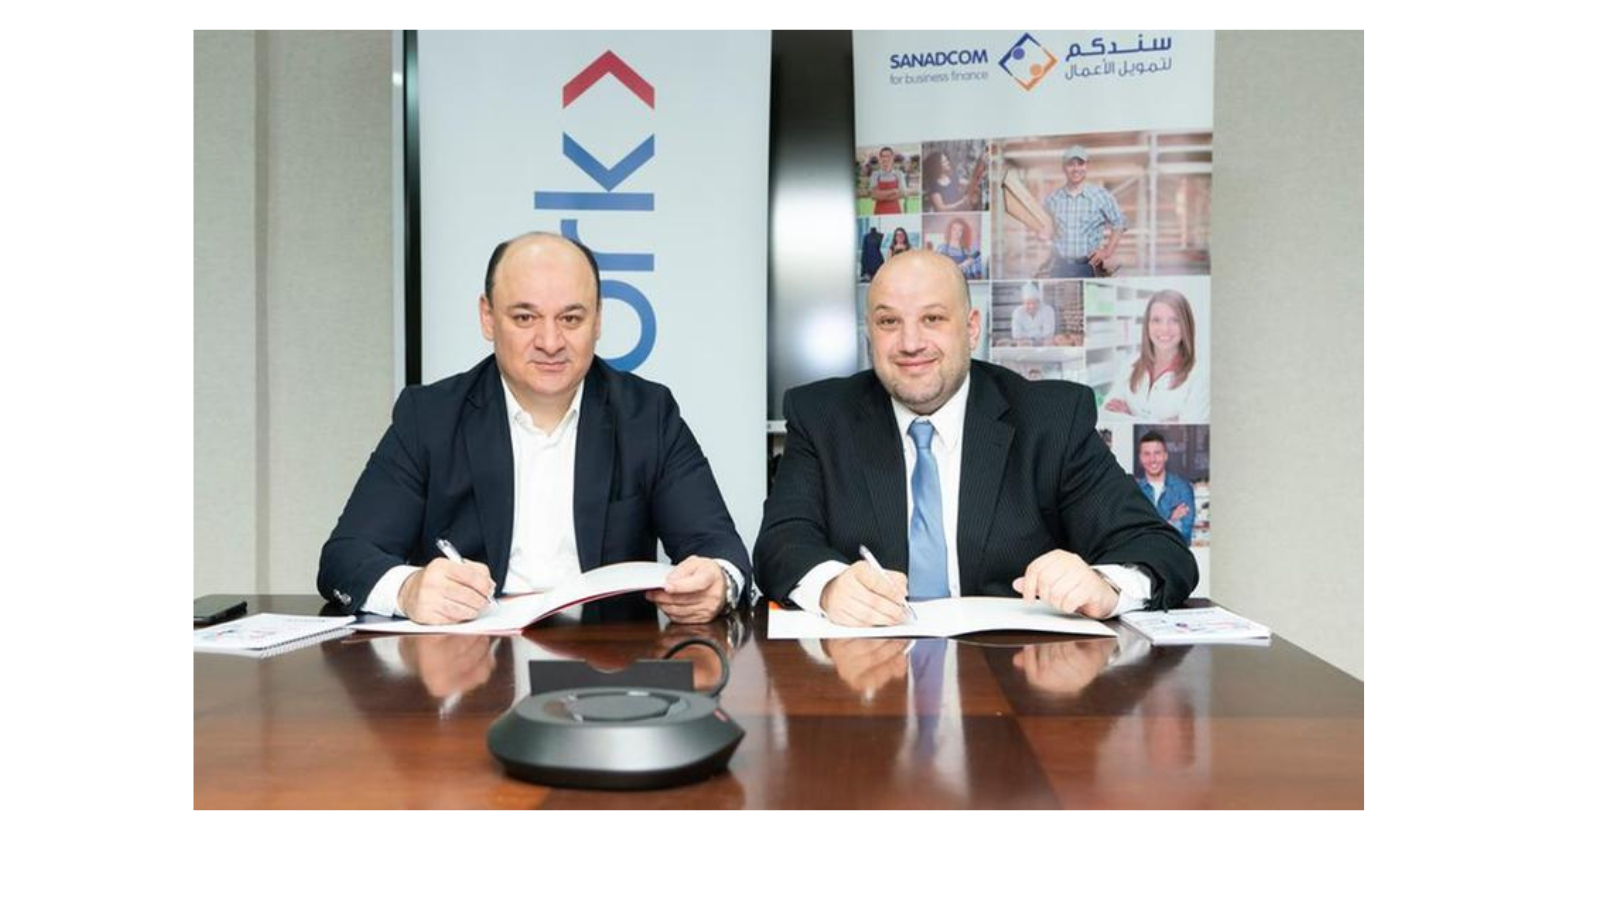 Fadi Amireh, CEO of Sanadcom for Business Finance, and Amjad Al-Sadeq, CEO of Network International Jordan signing the agreement